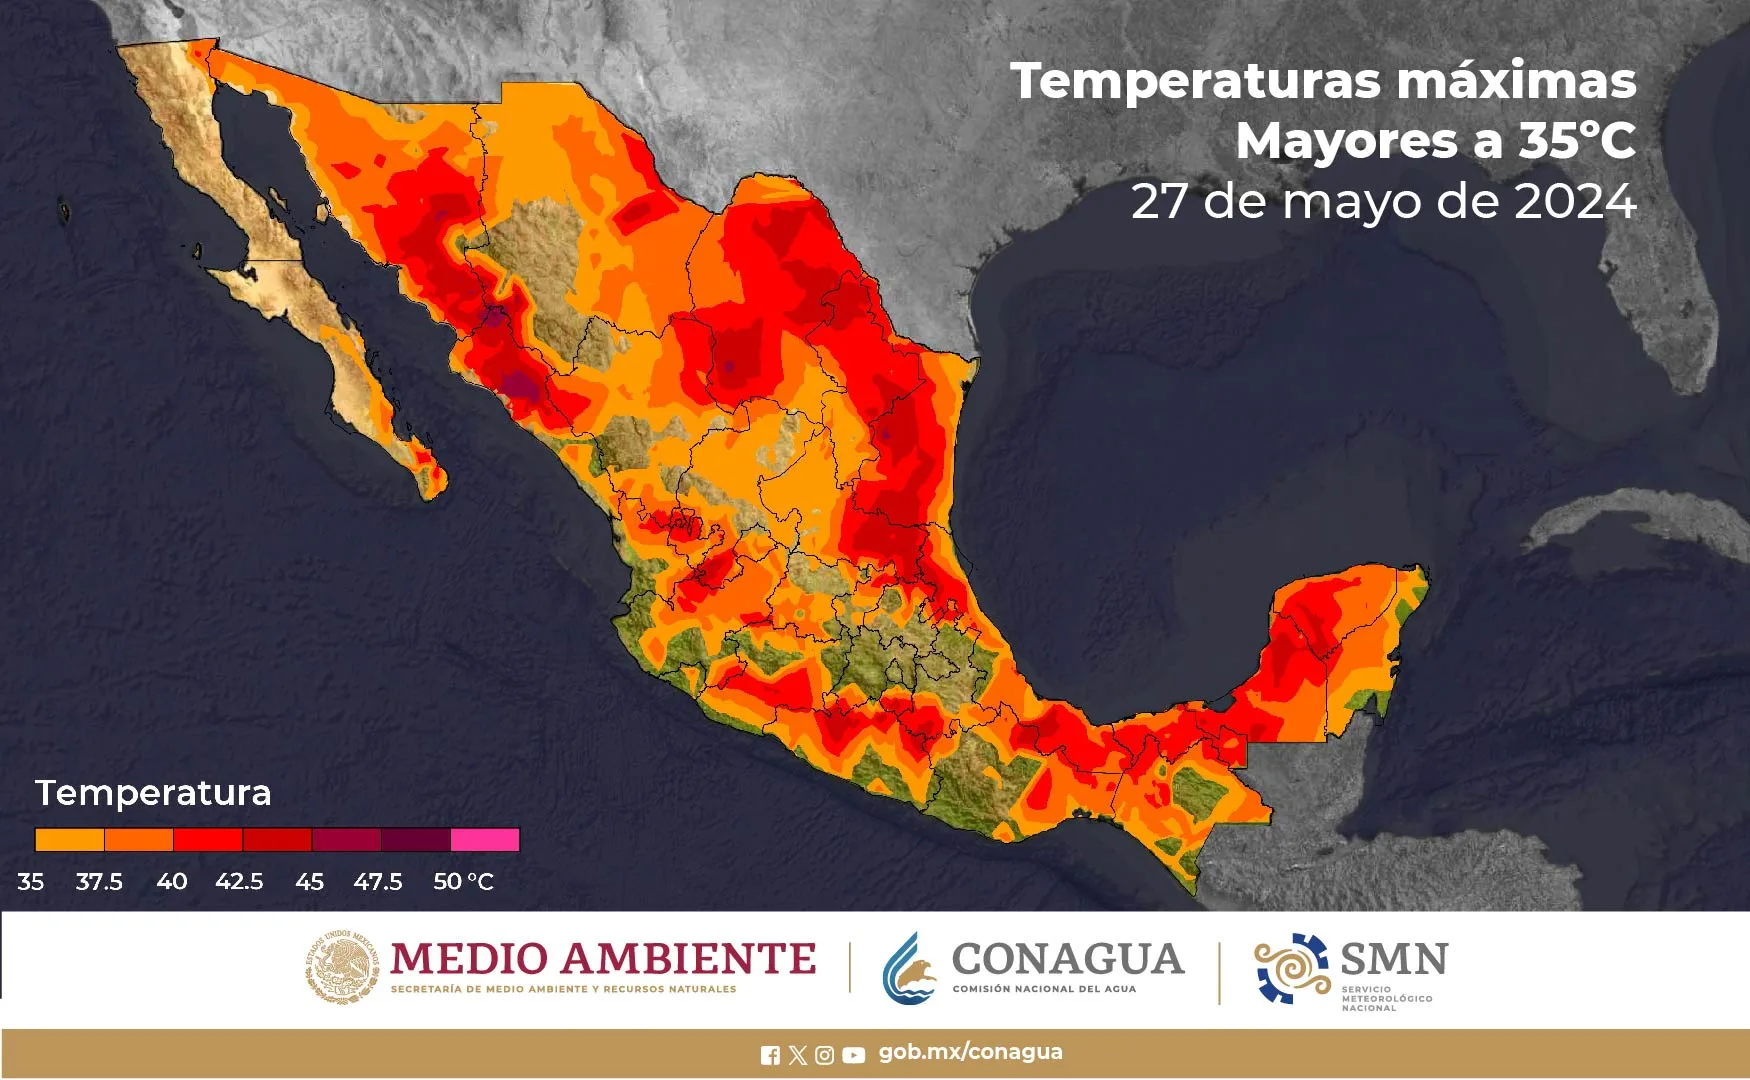 Rompe el récord de temperaturas la tercera ola de calor, en Guerrero